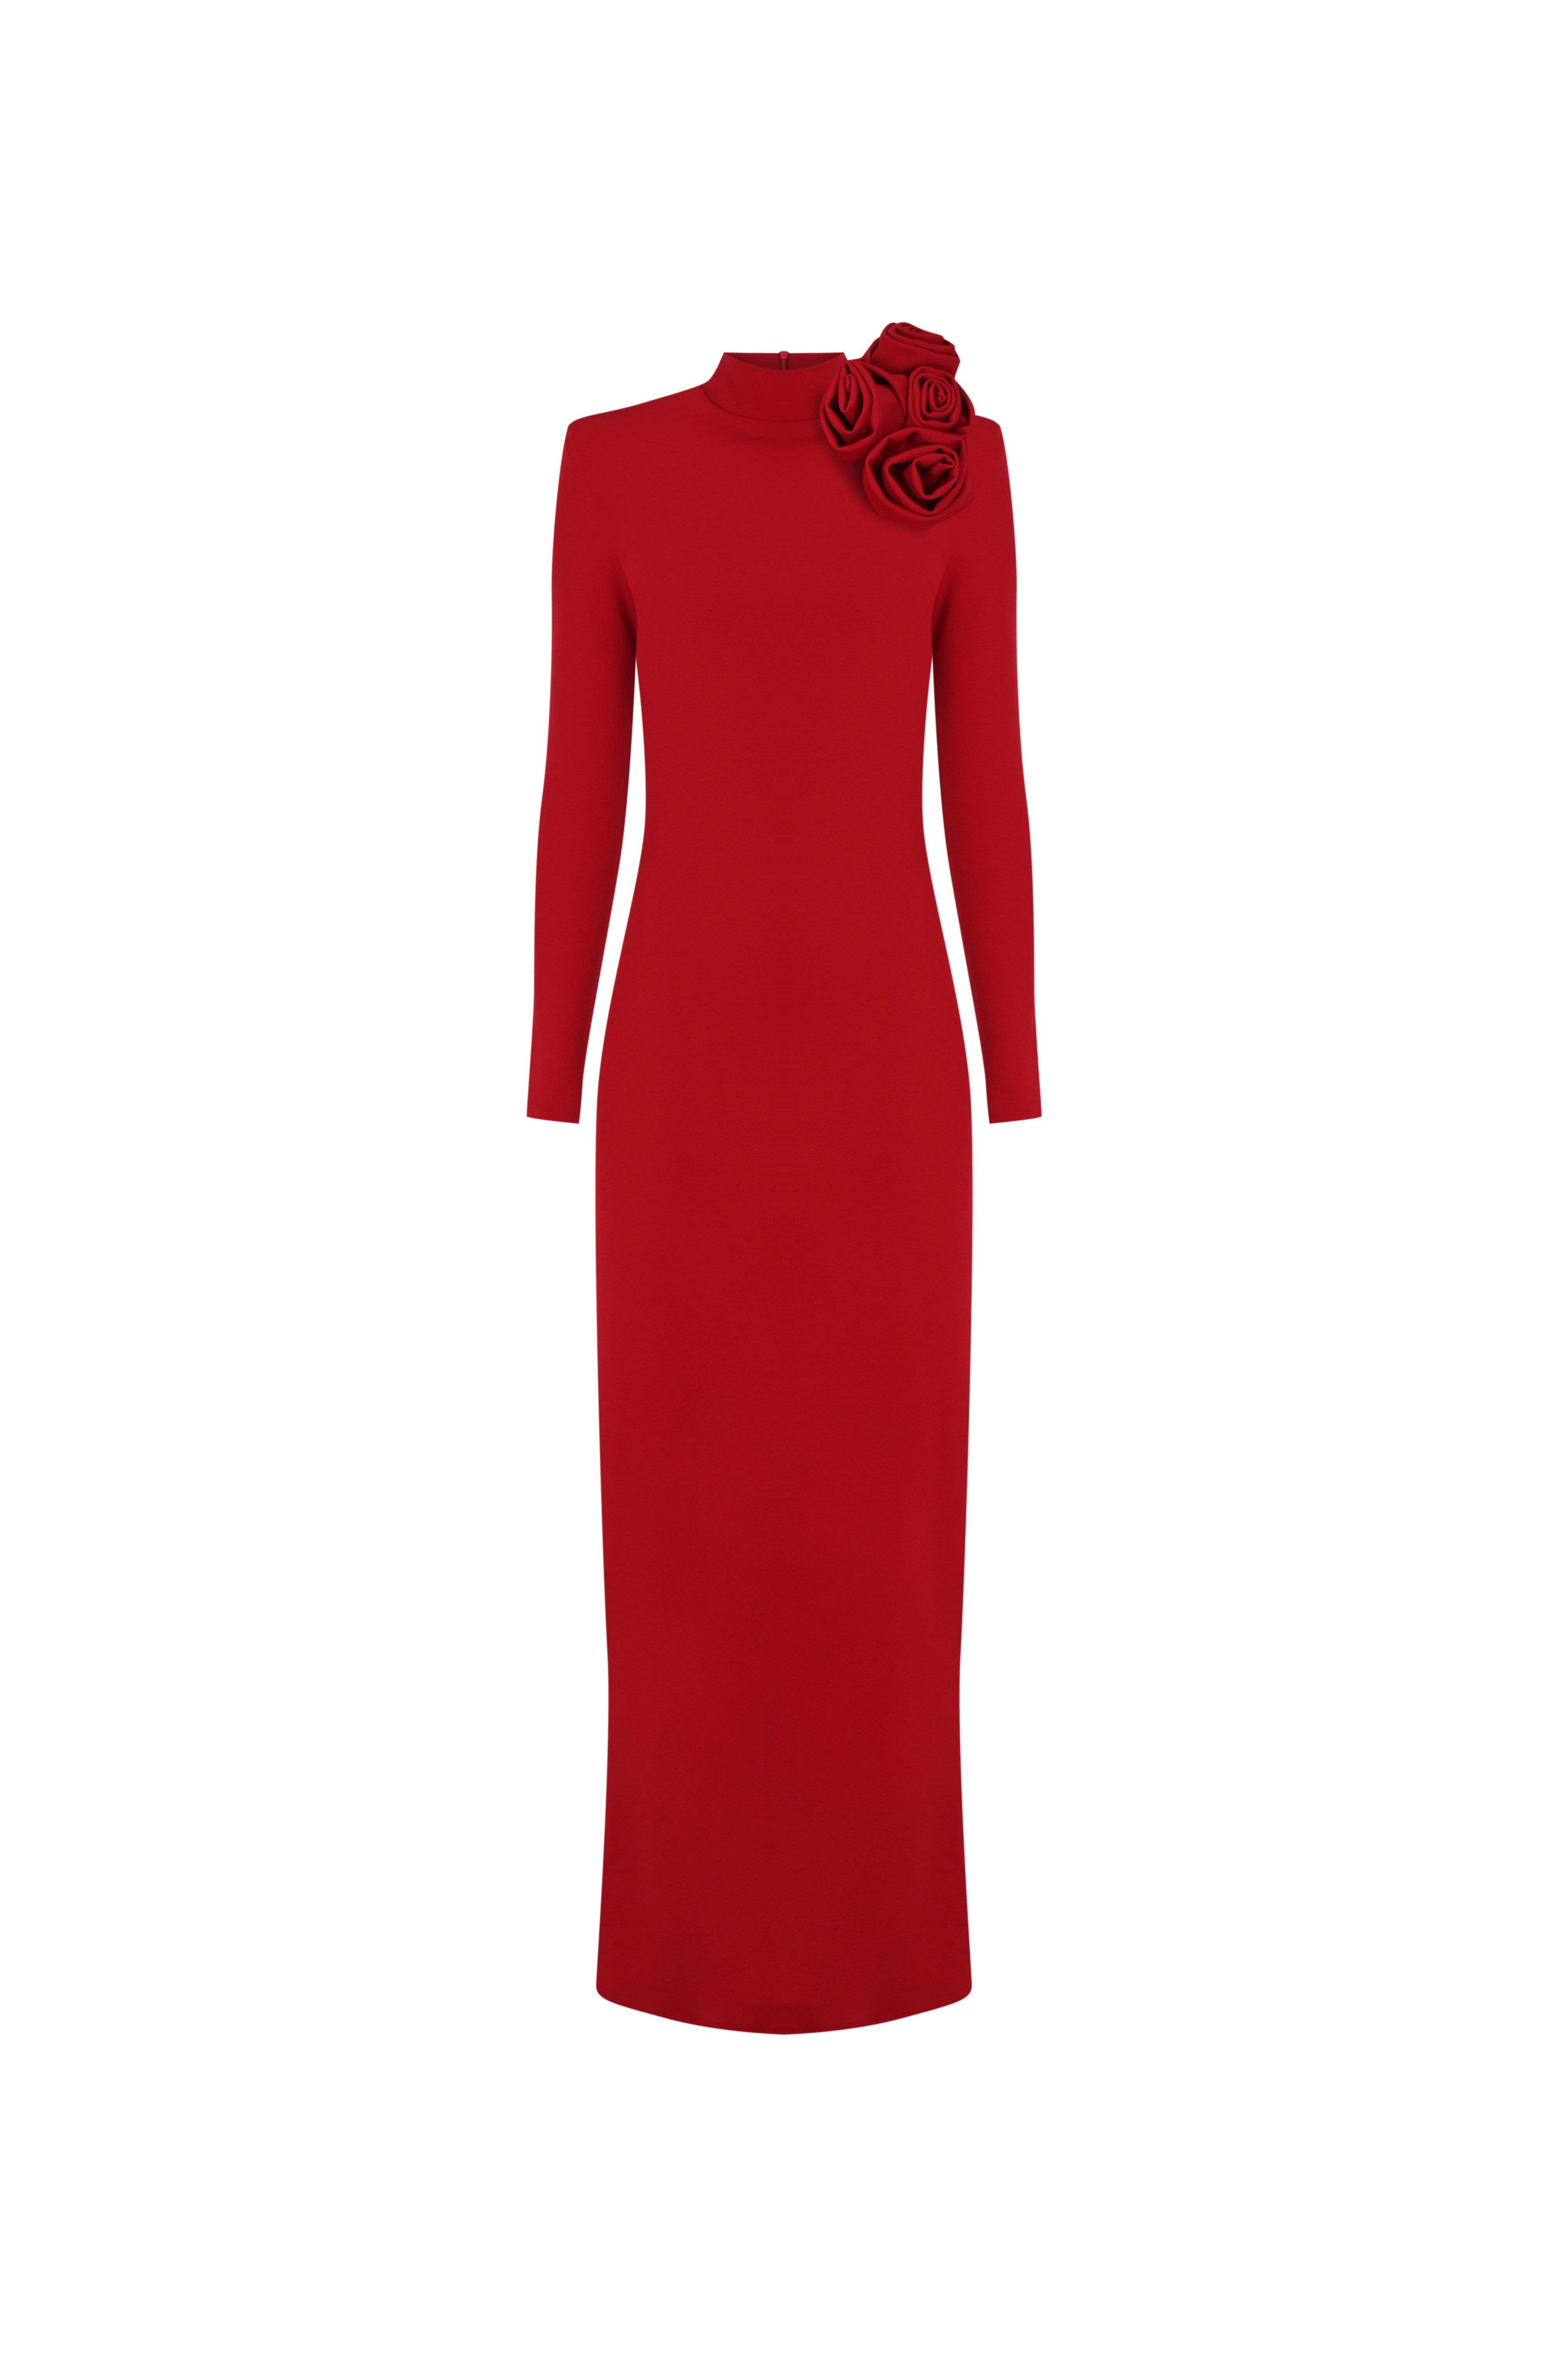 Glambils Breathtaking Red Dress